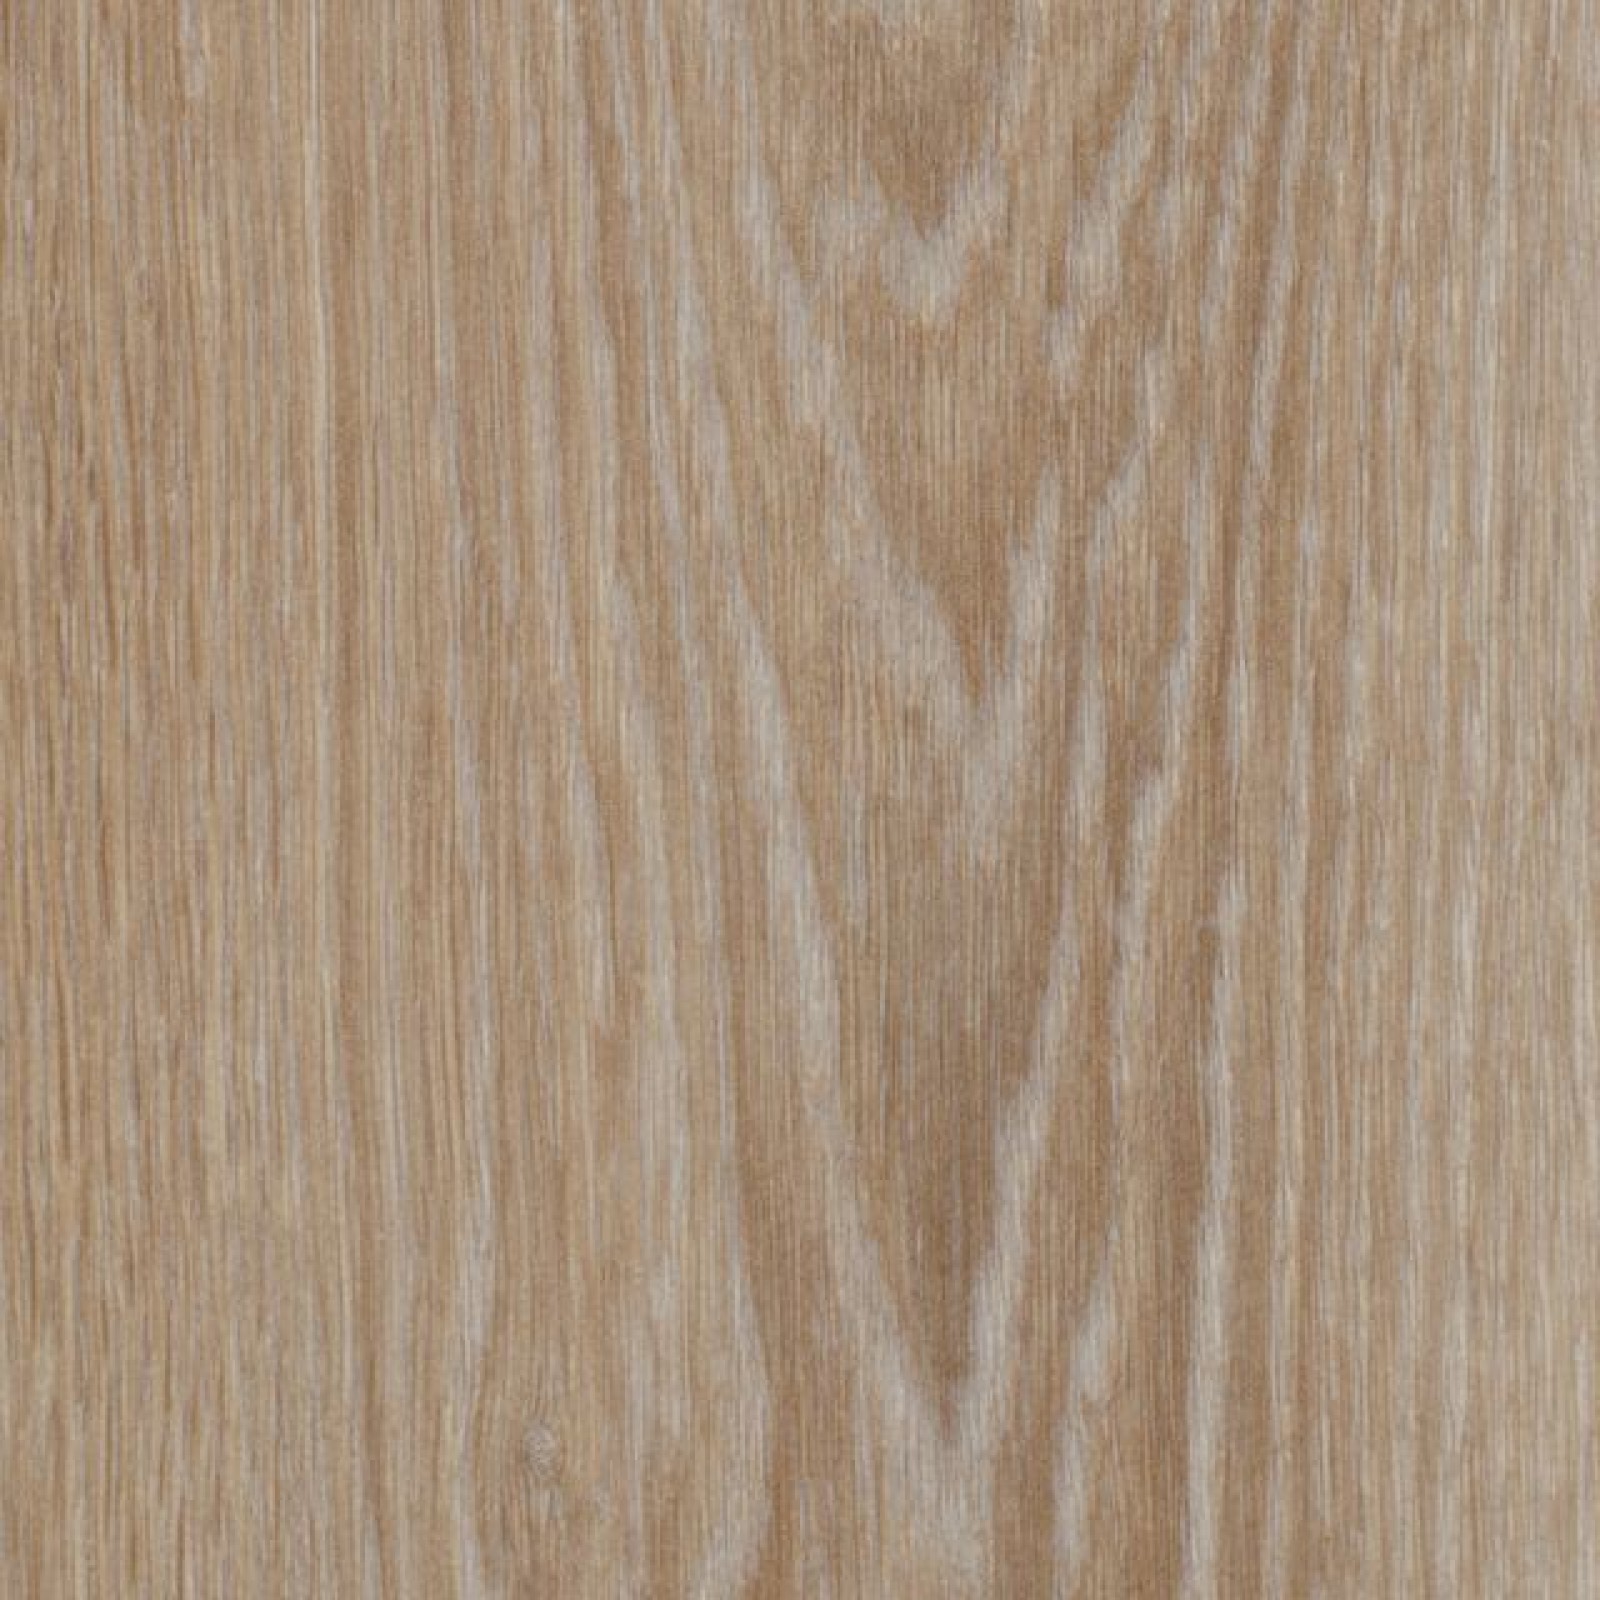 Vzor - 63412FL1 blond timber (120x20cm)